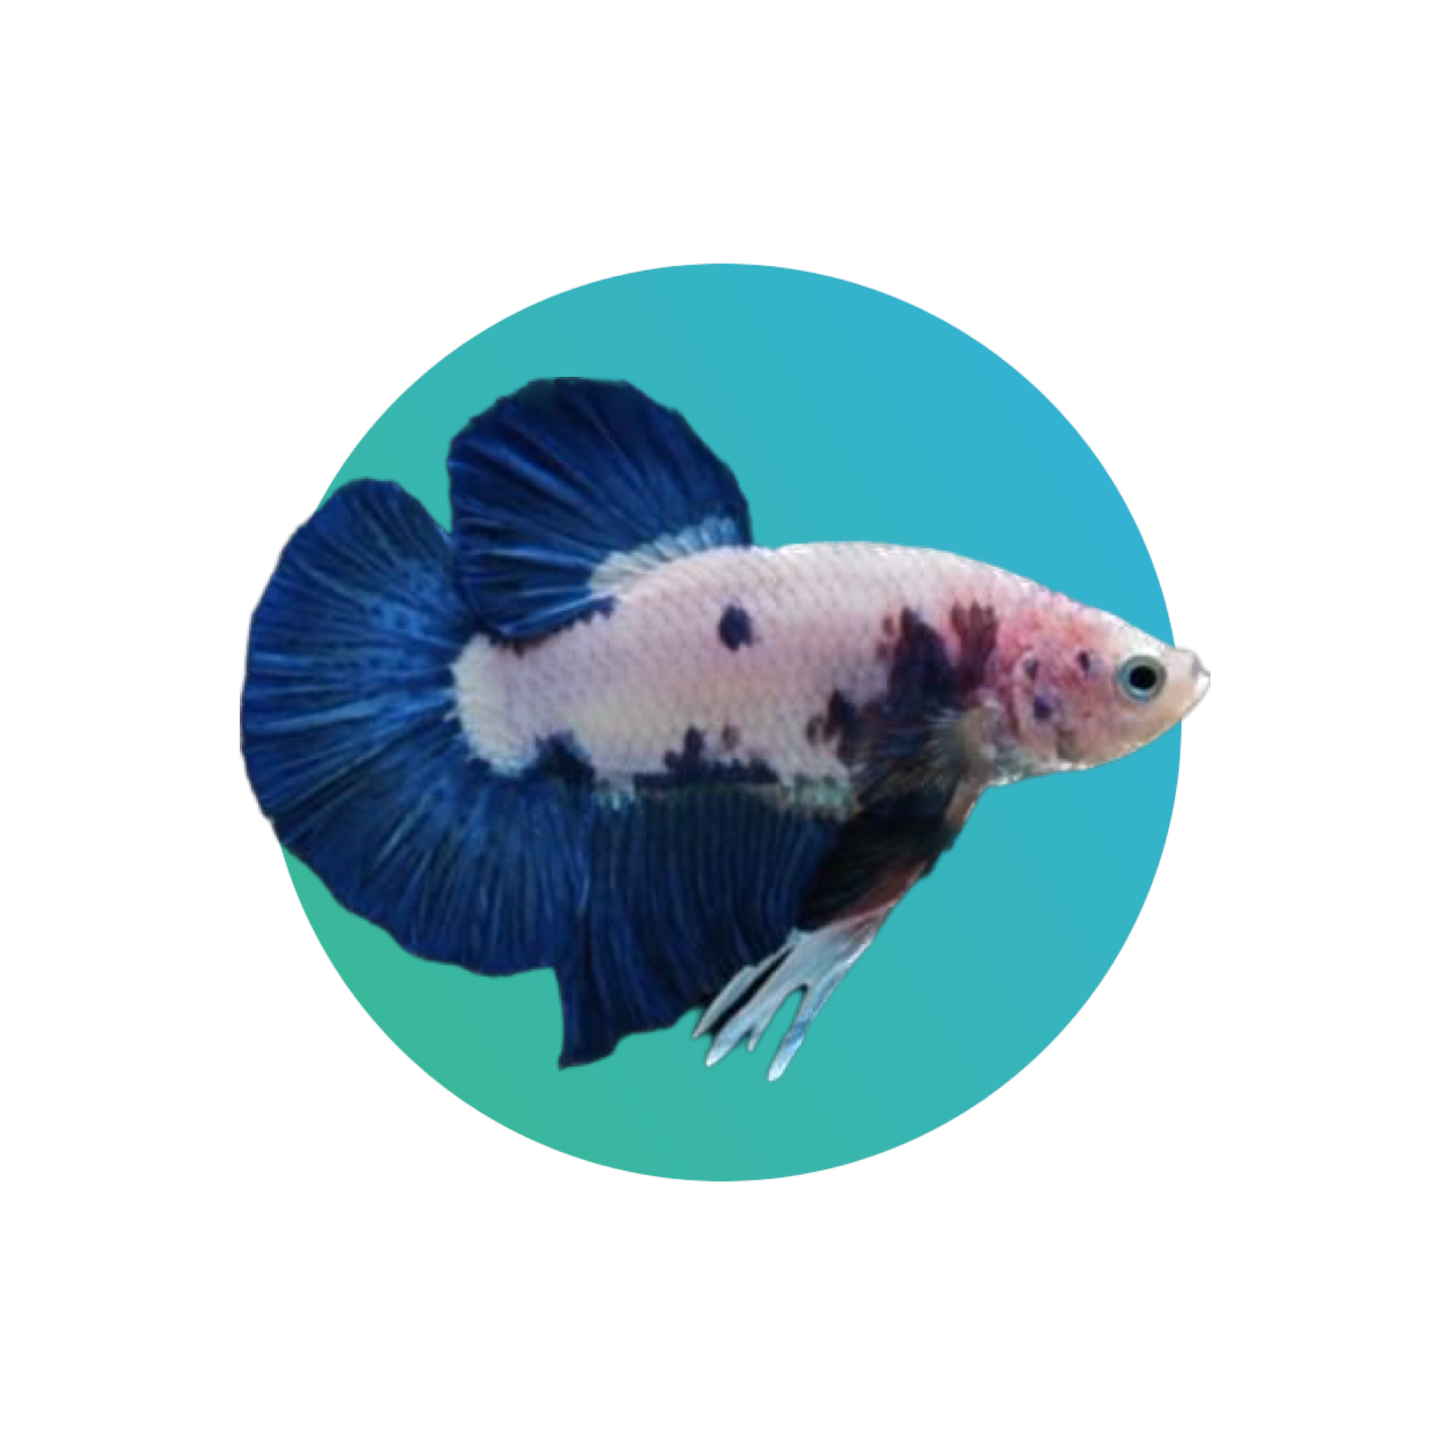 Round tail (Plakat) betta male (fighter fish)